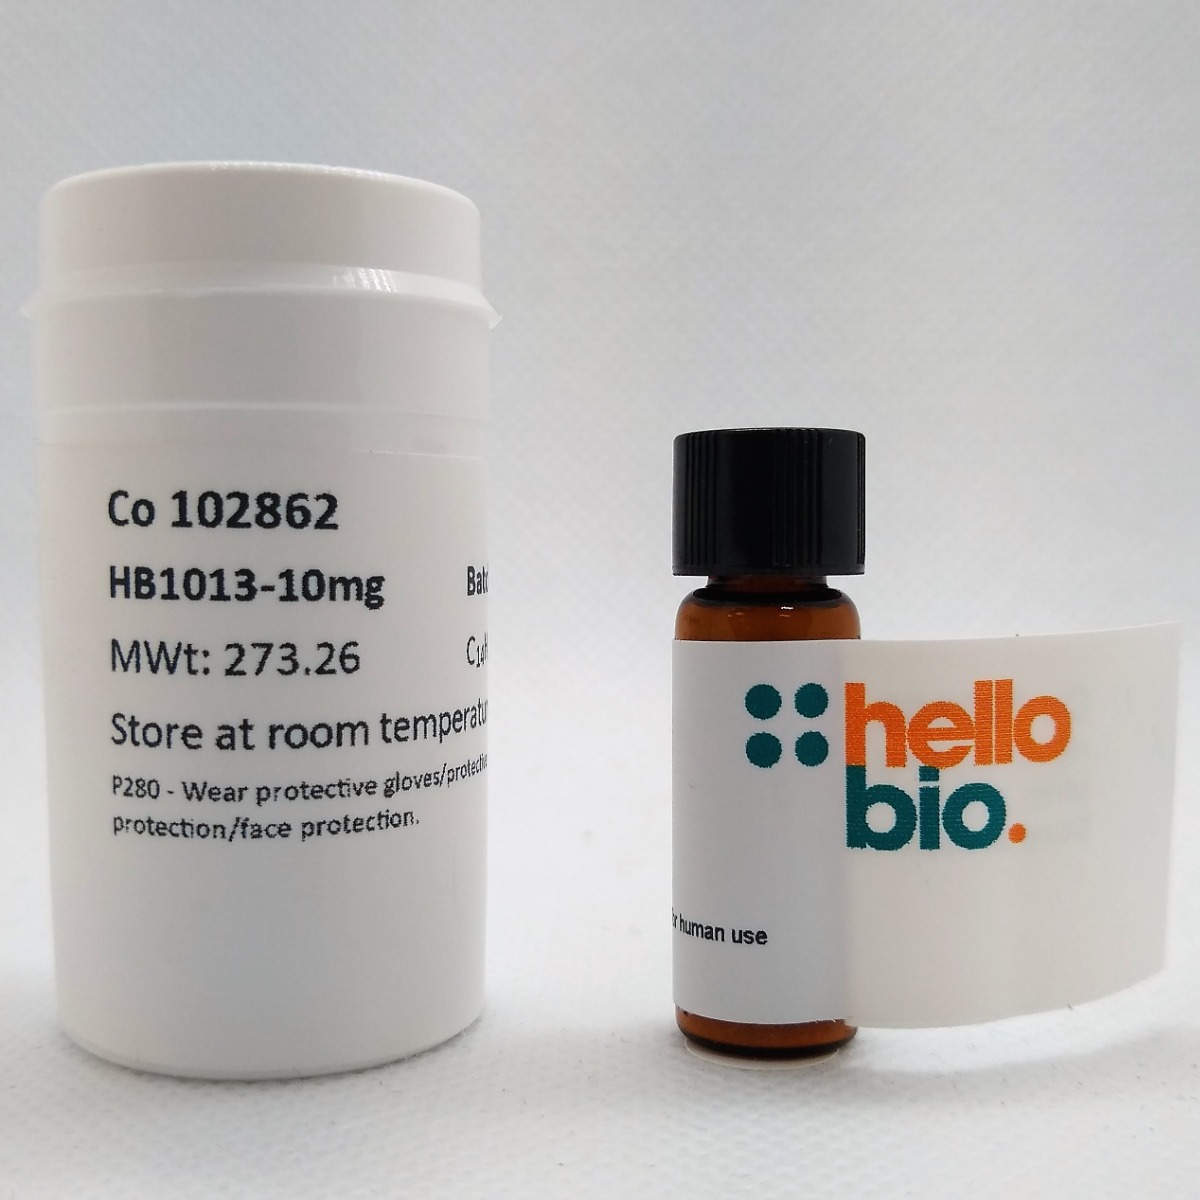 Co 102862 product vial image | Hello Bio